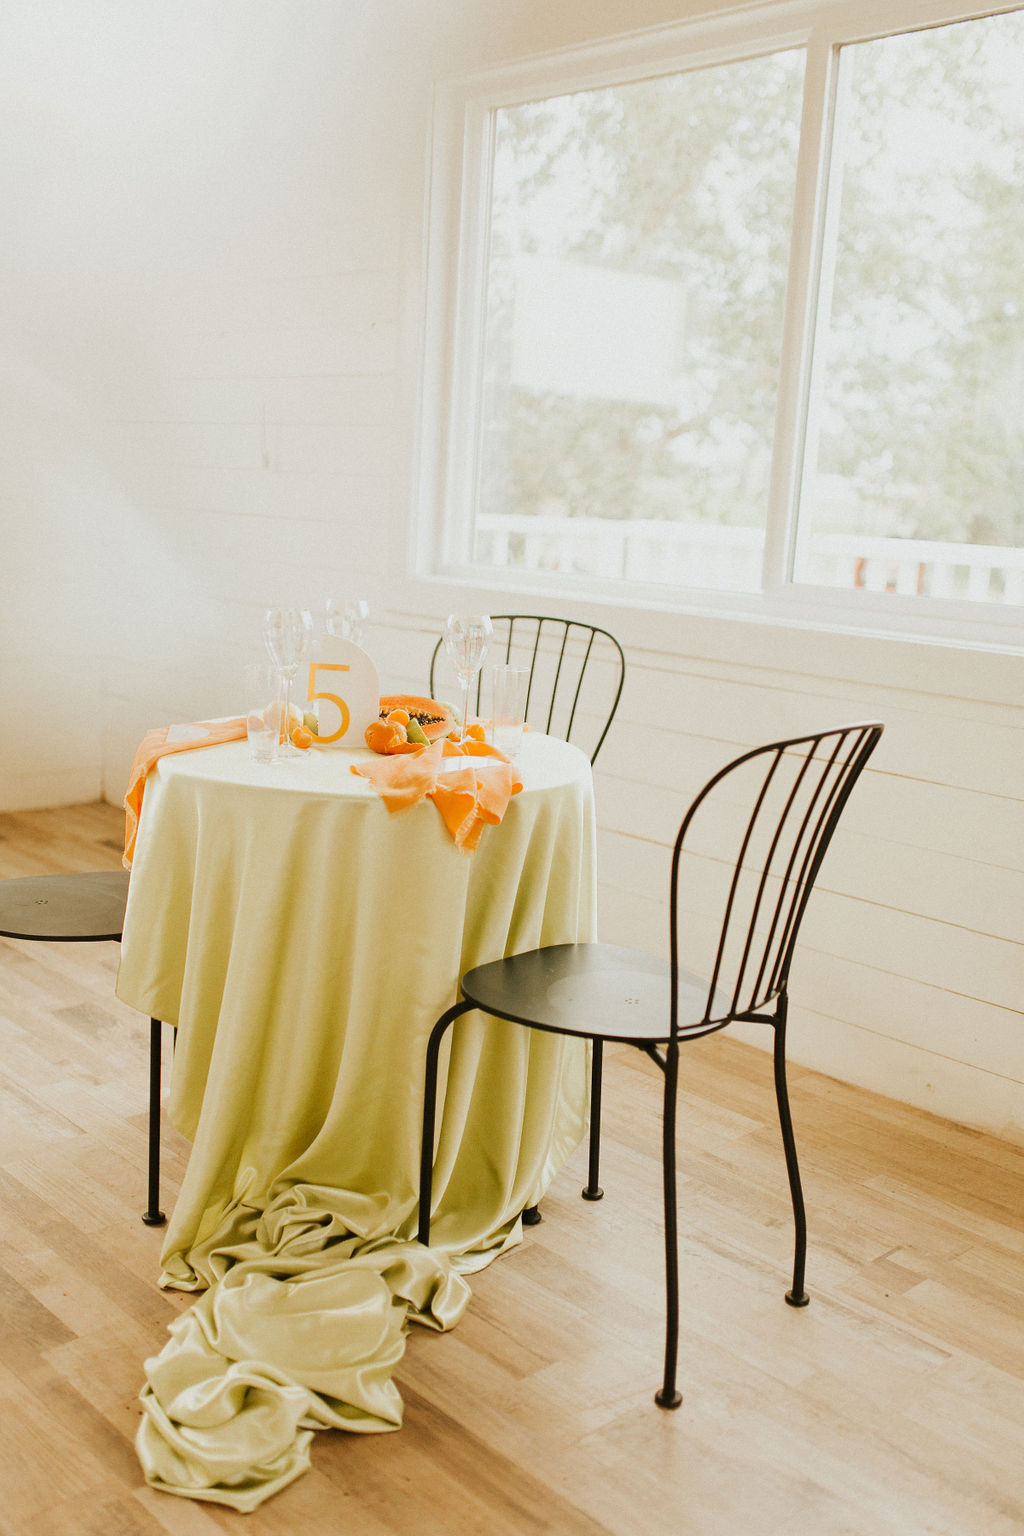 Farmhouse inspired wedding reception decor for tangerine wedding inspiration